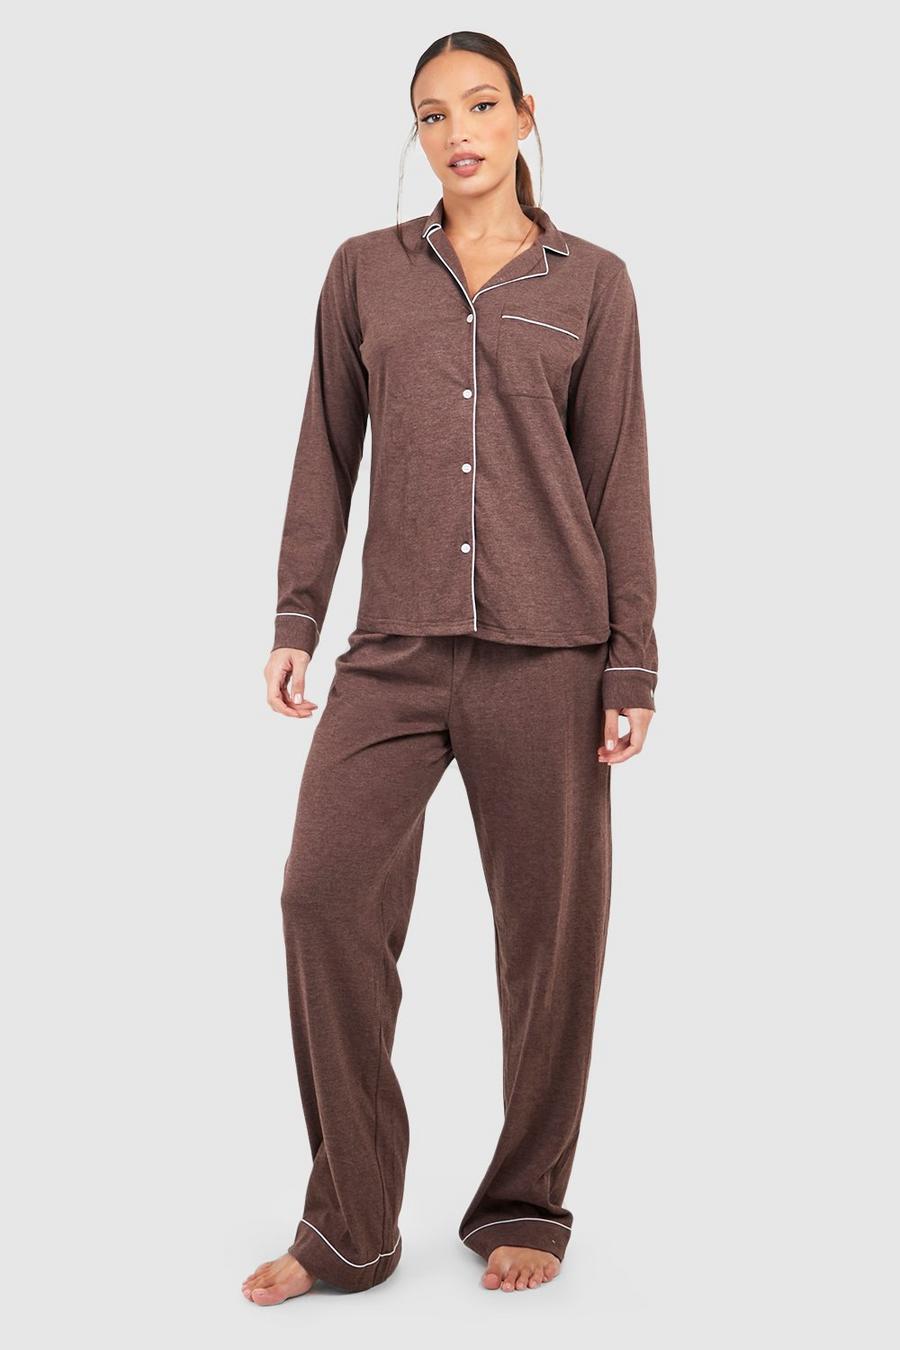 Tall - Ensemble de pyjama avec top boutonné et pantalon, Chocolate